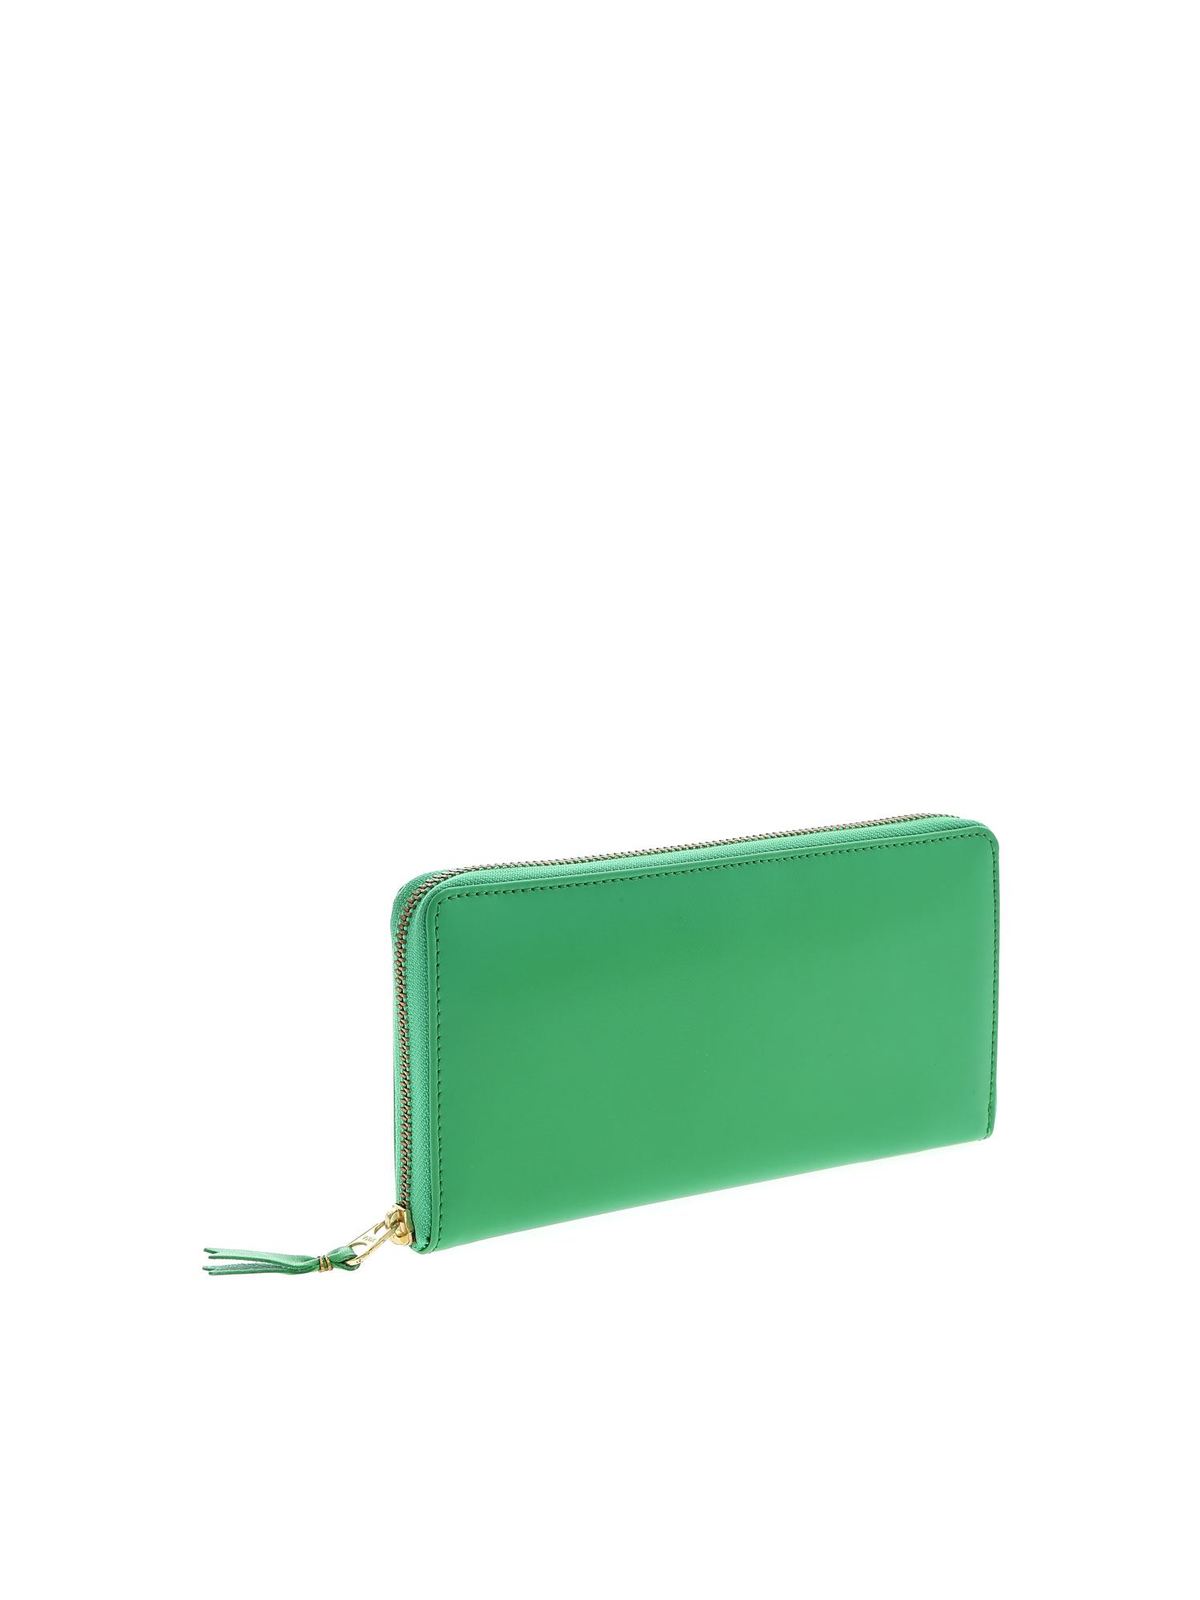 green purses online